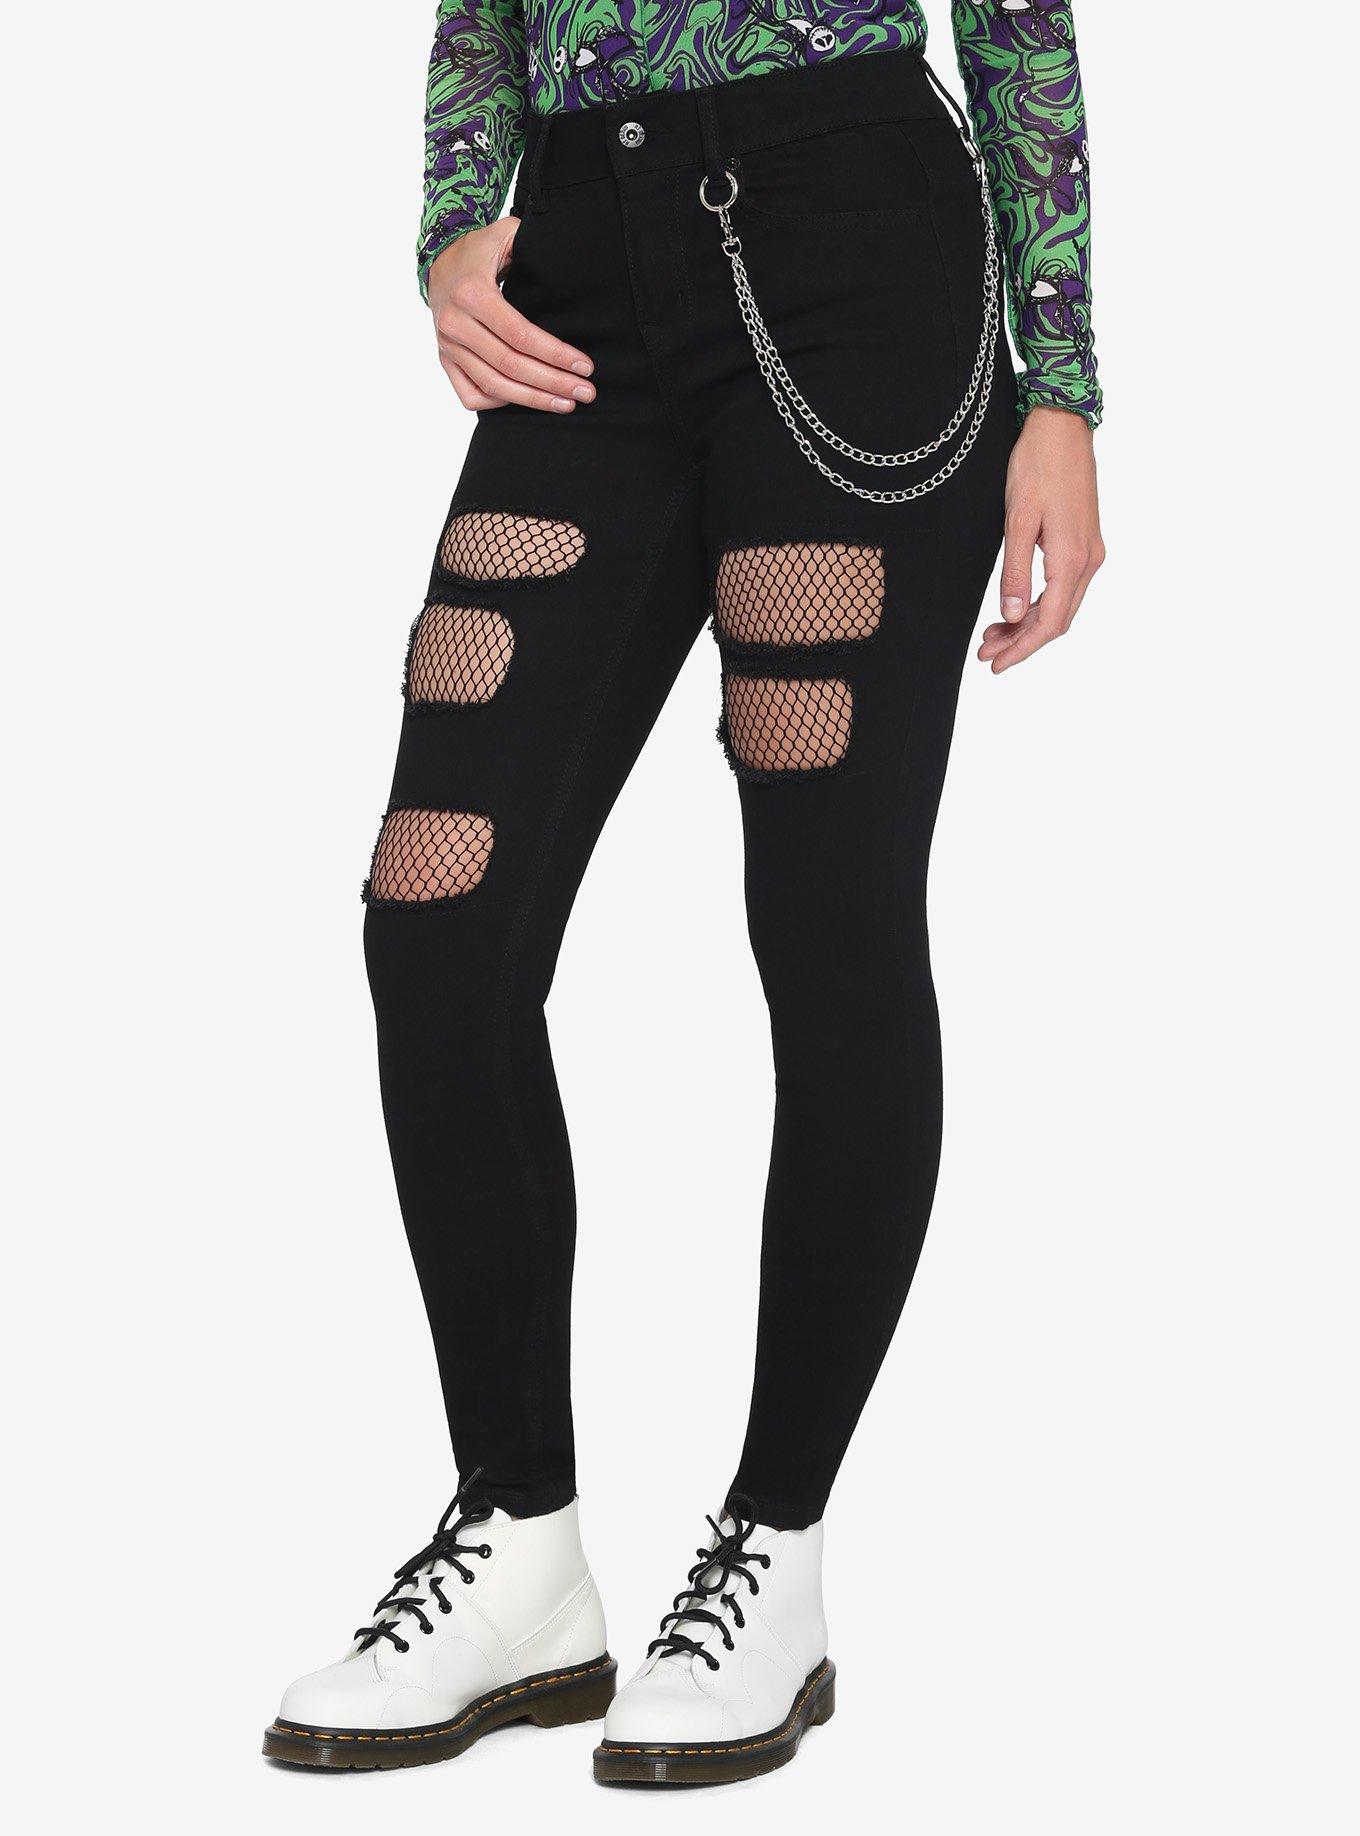 Black Fishnet Destructed Chain Skinny Jeans Plus Size